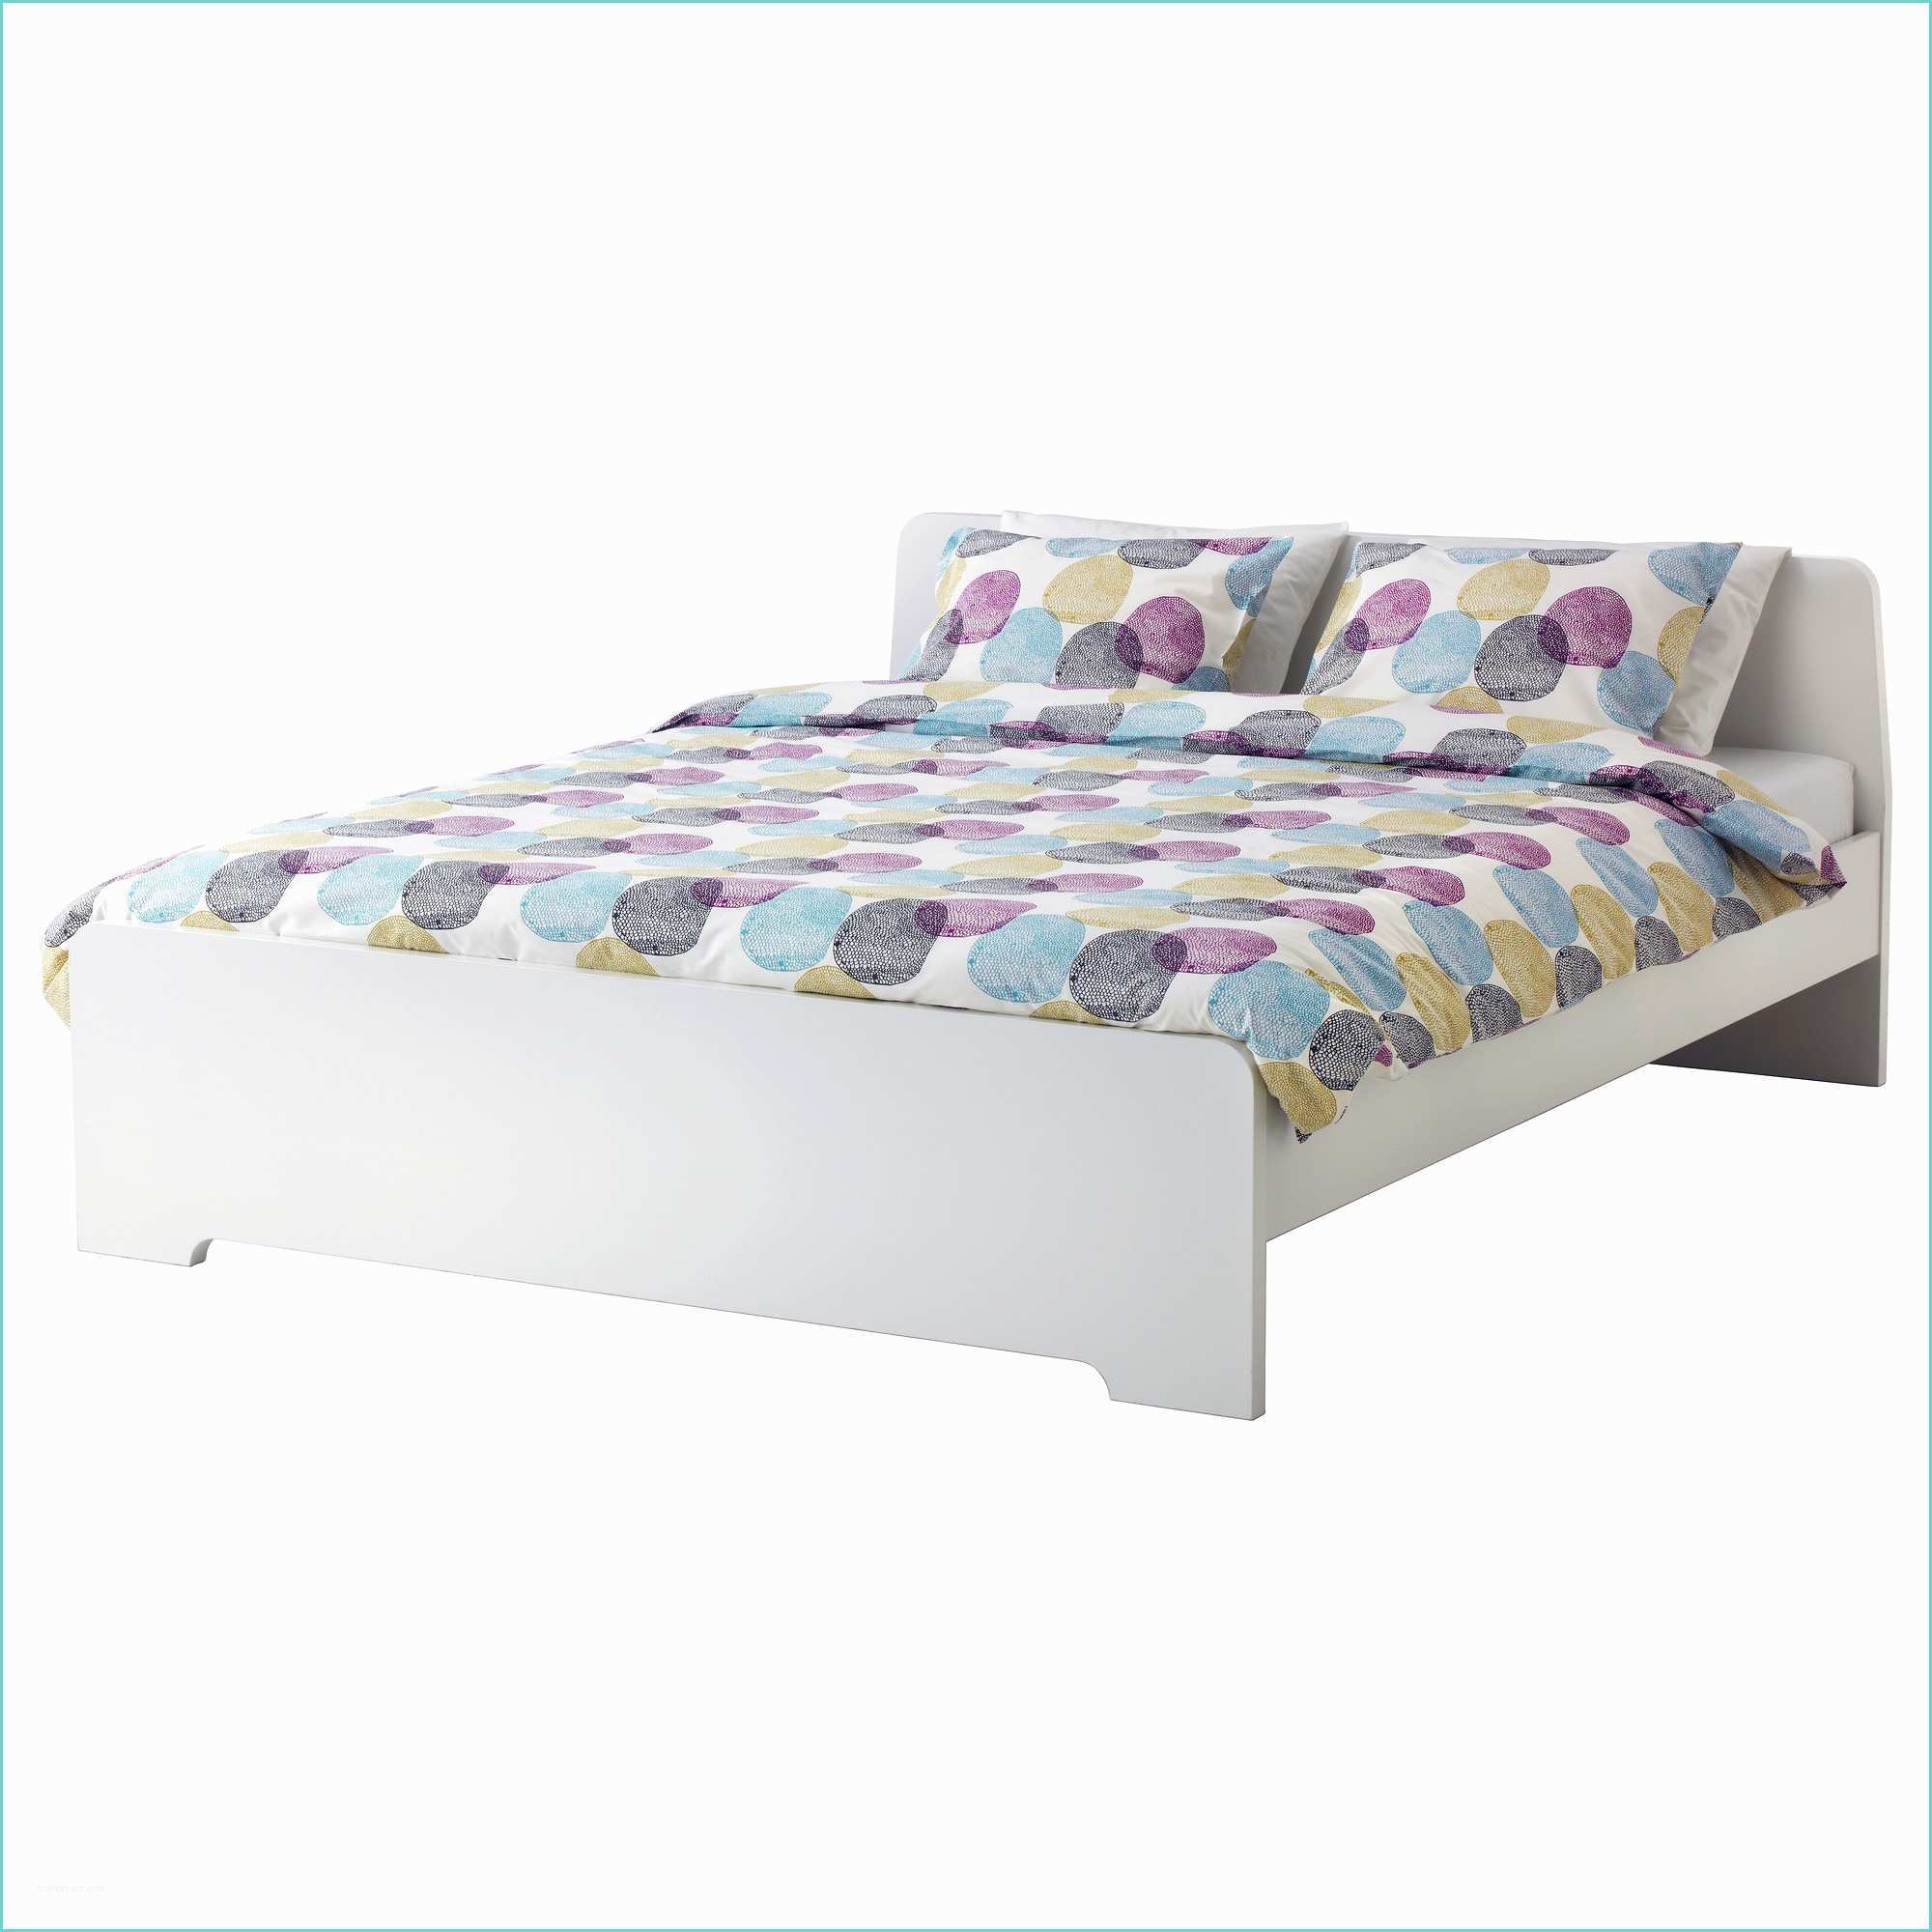 Leirsund Slatted Bed Base Adjustable askvoll Bed Frame White Leirsund Standard Double Ikea